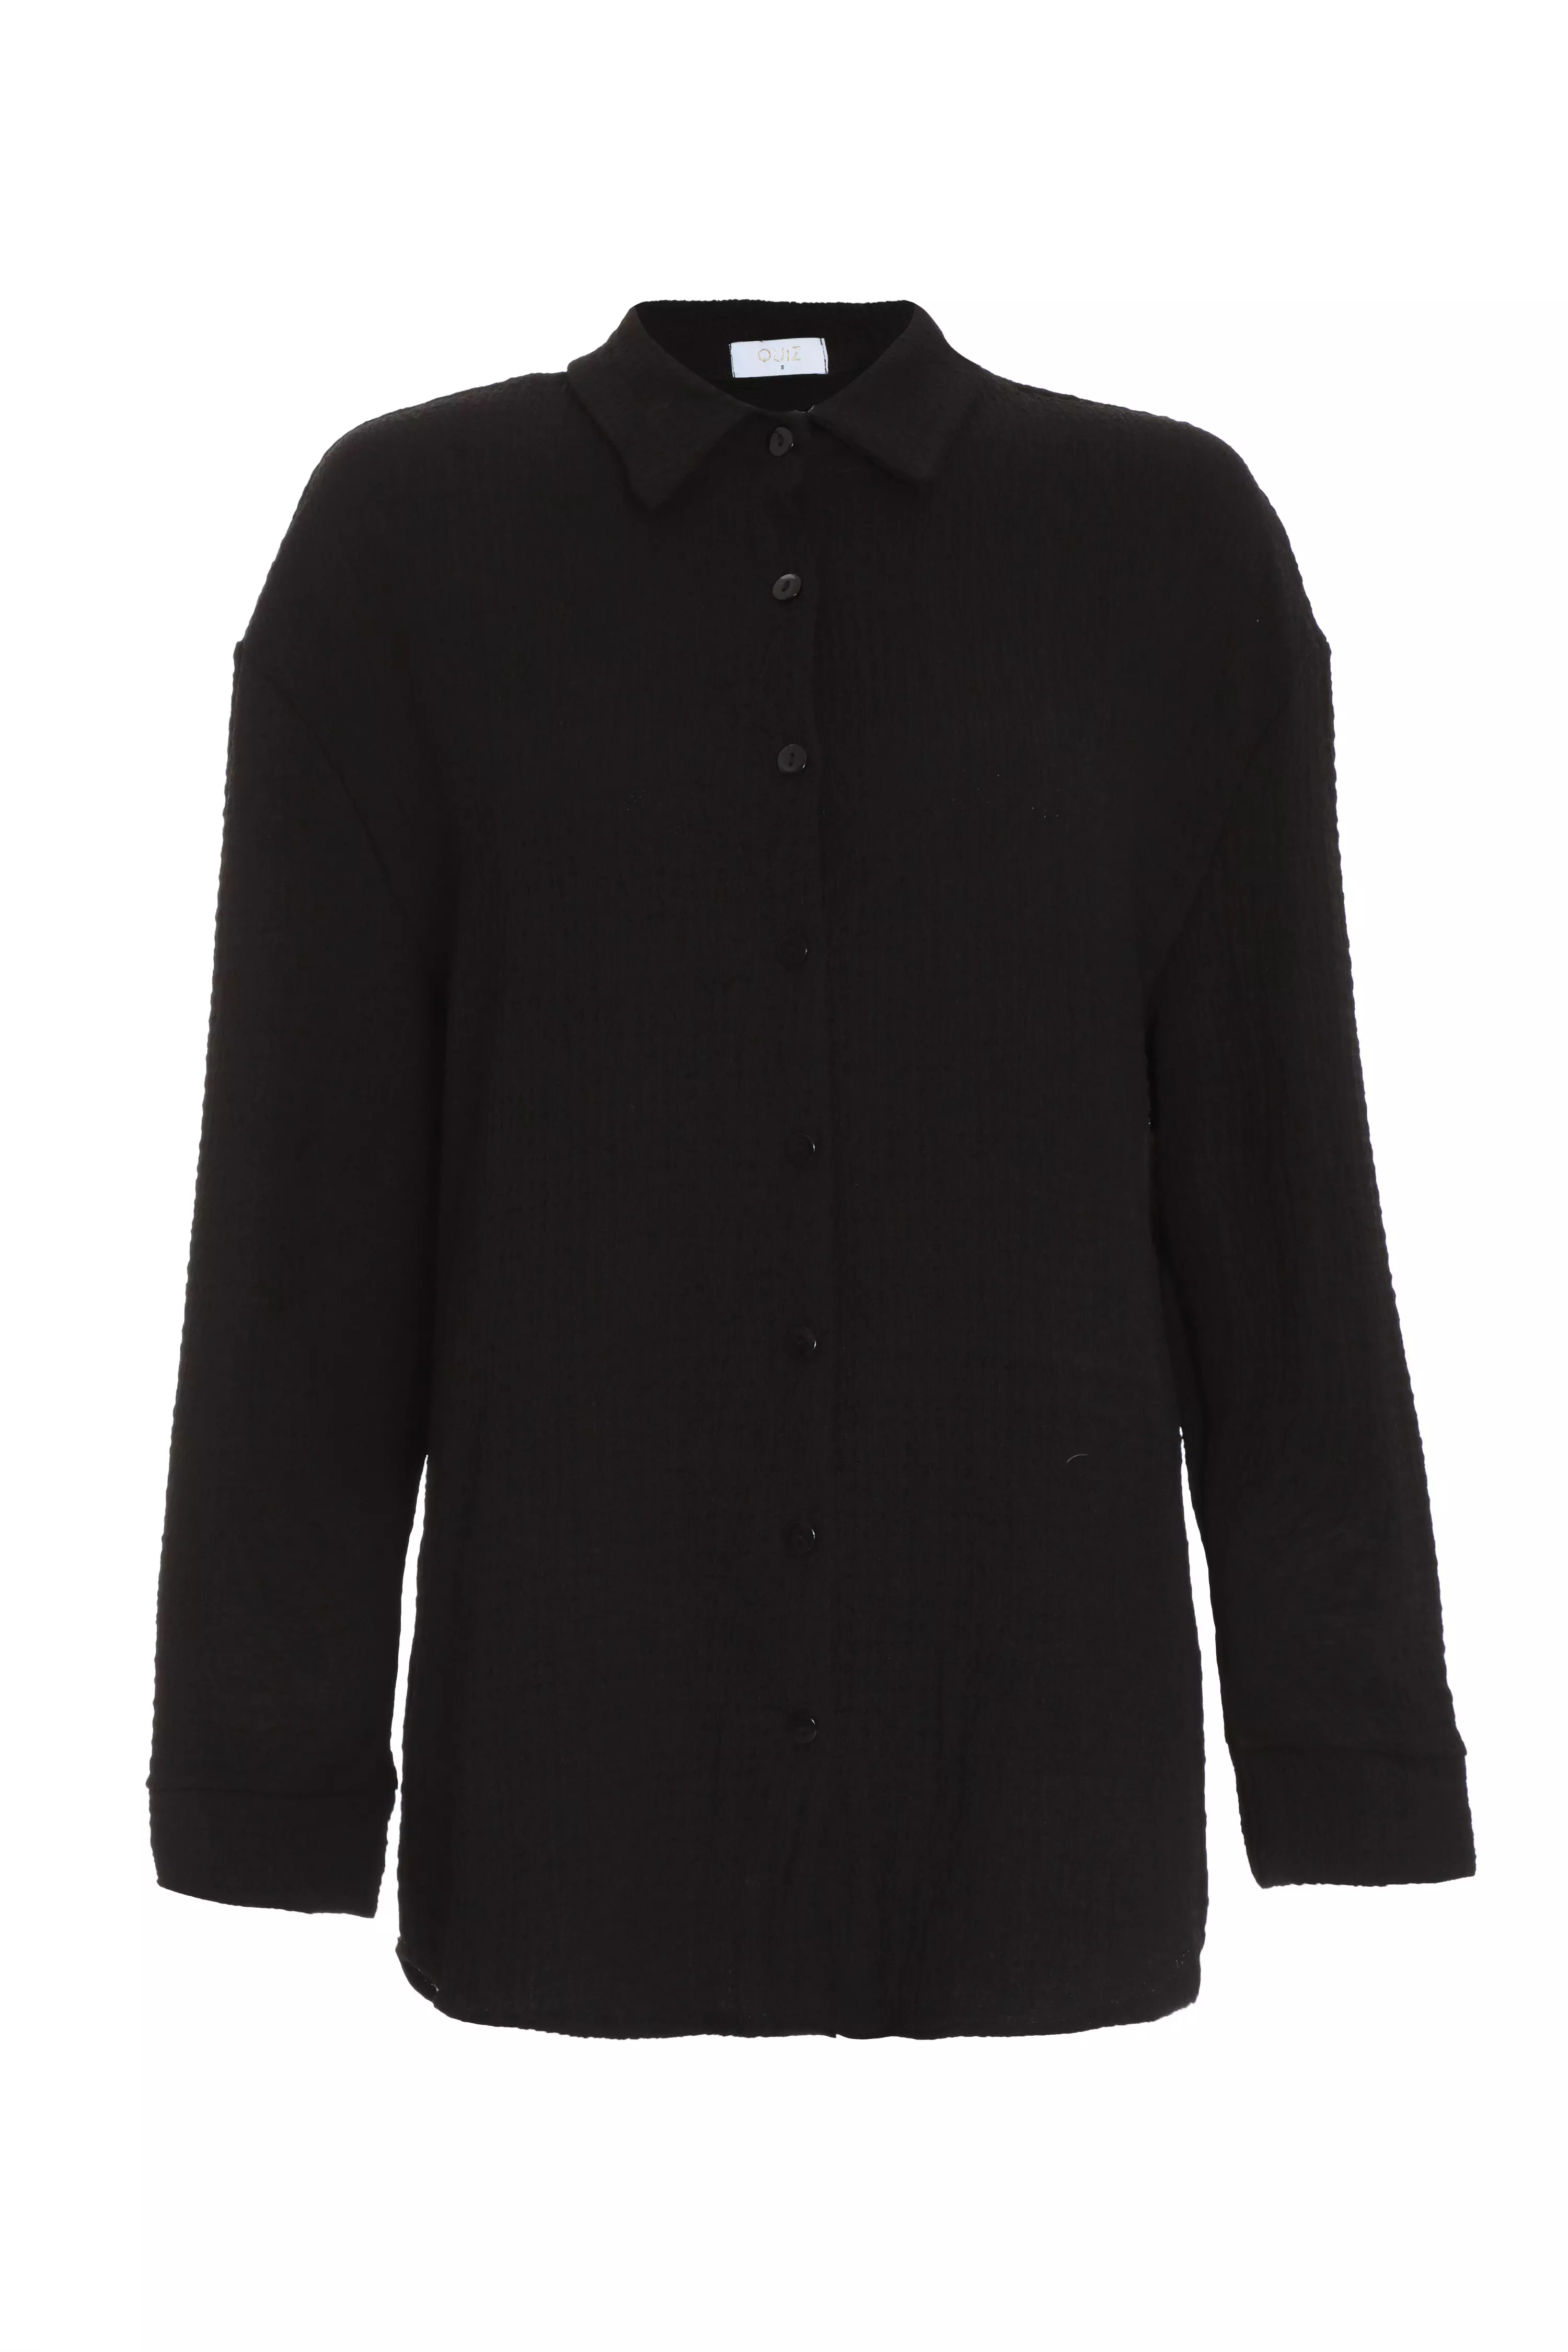 Black Long Sleeve Textured Shirt